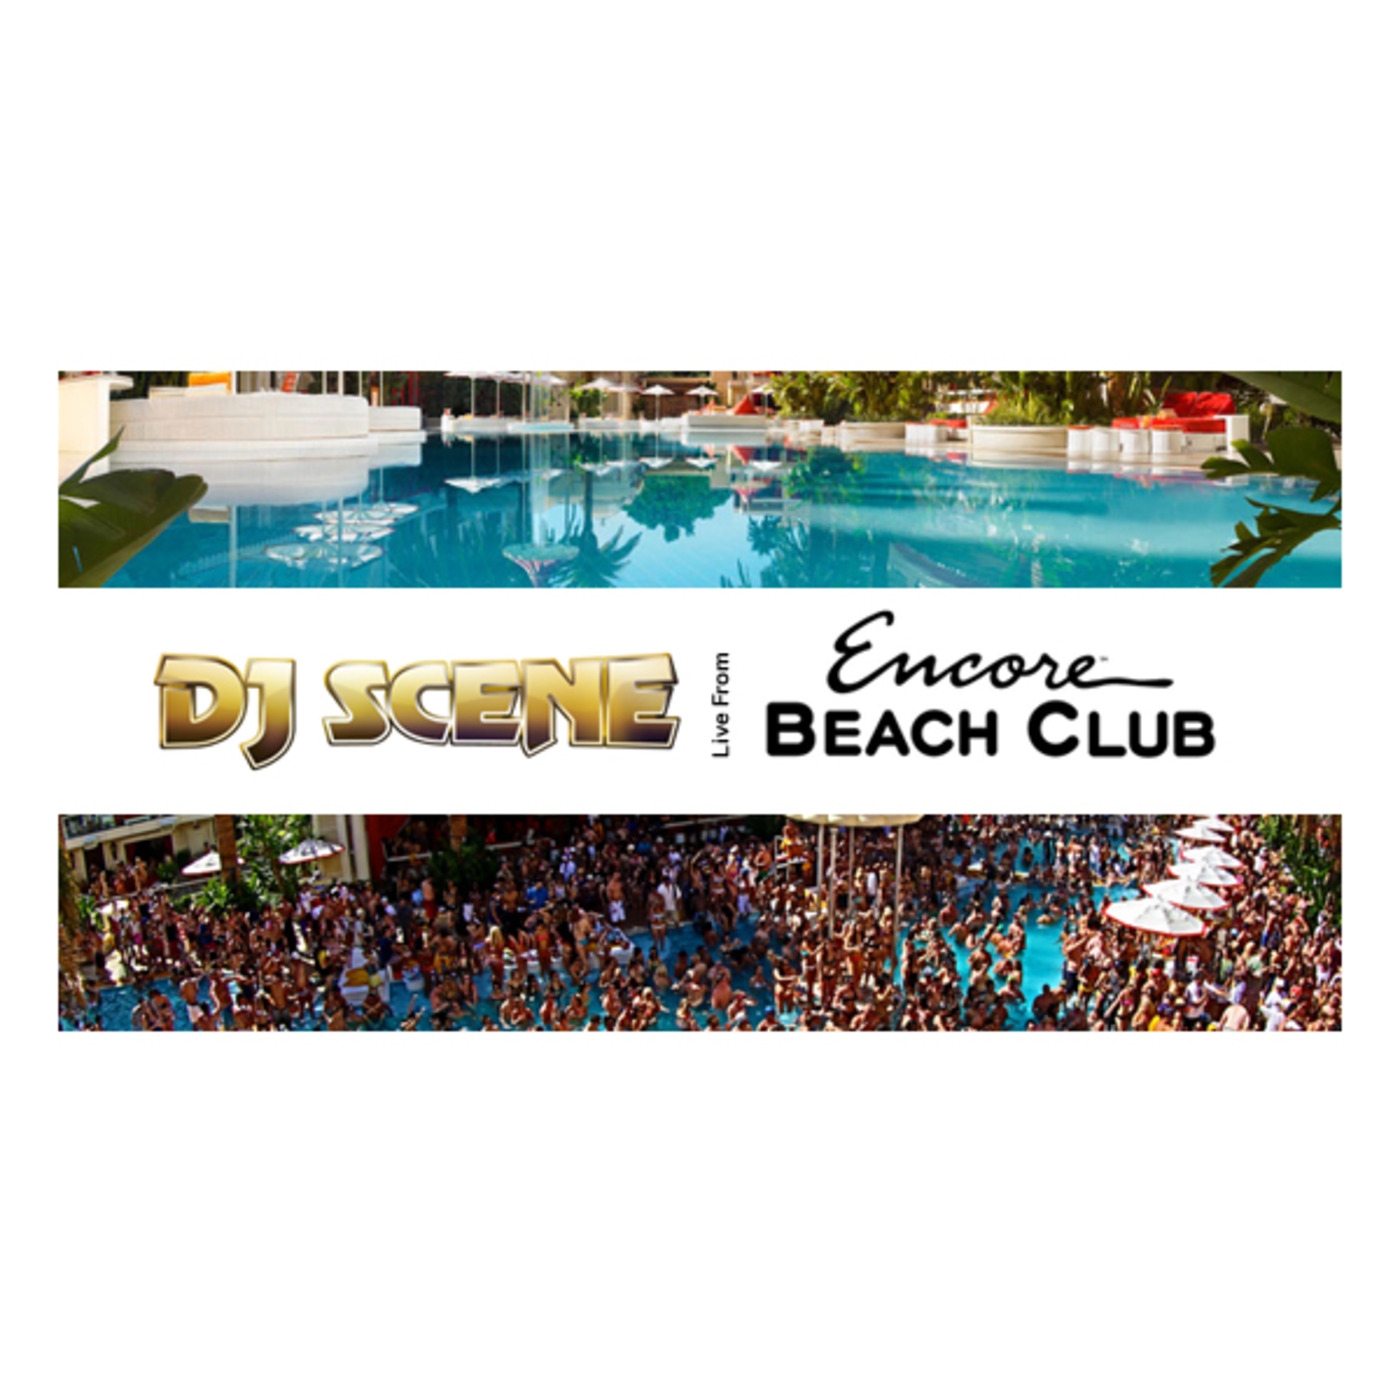 DJ Scene Live From Encore Beach Club